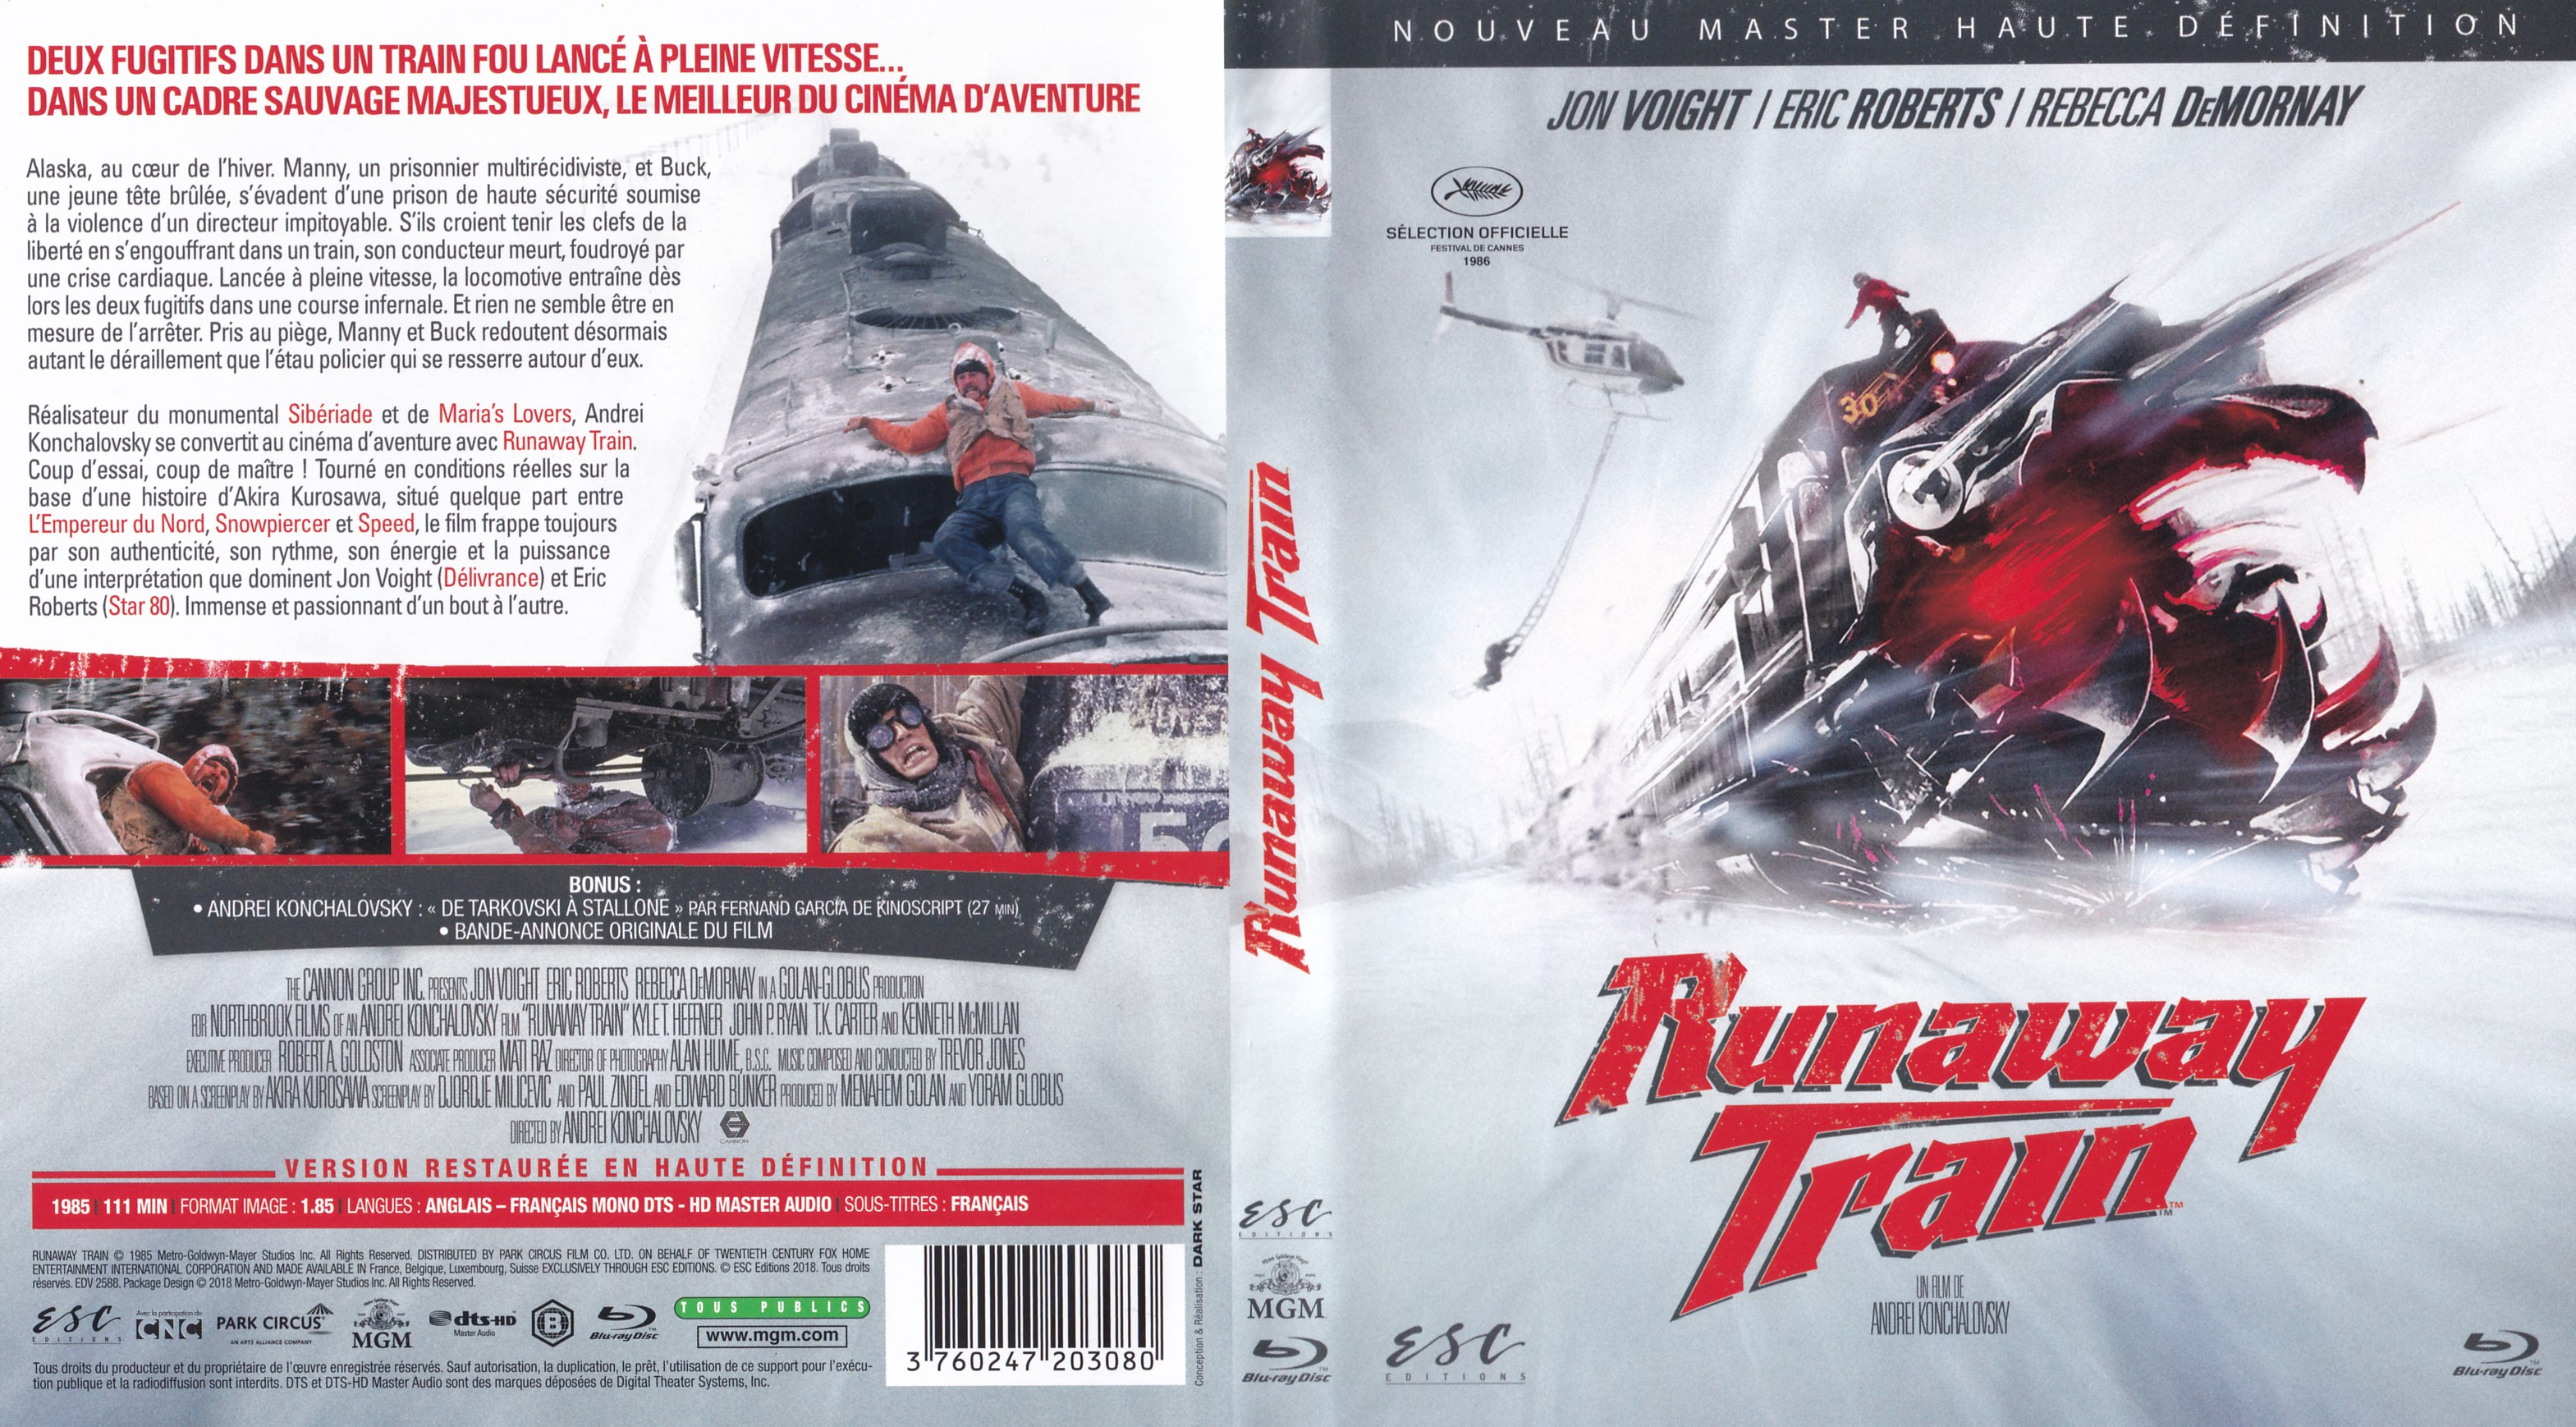 Jaquette DVD Runaway train (BLU-RAY)